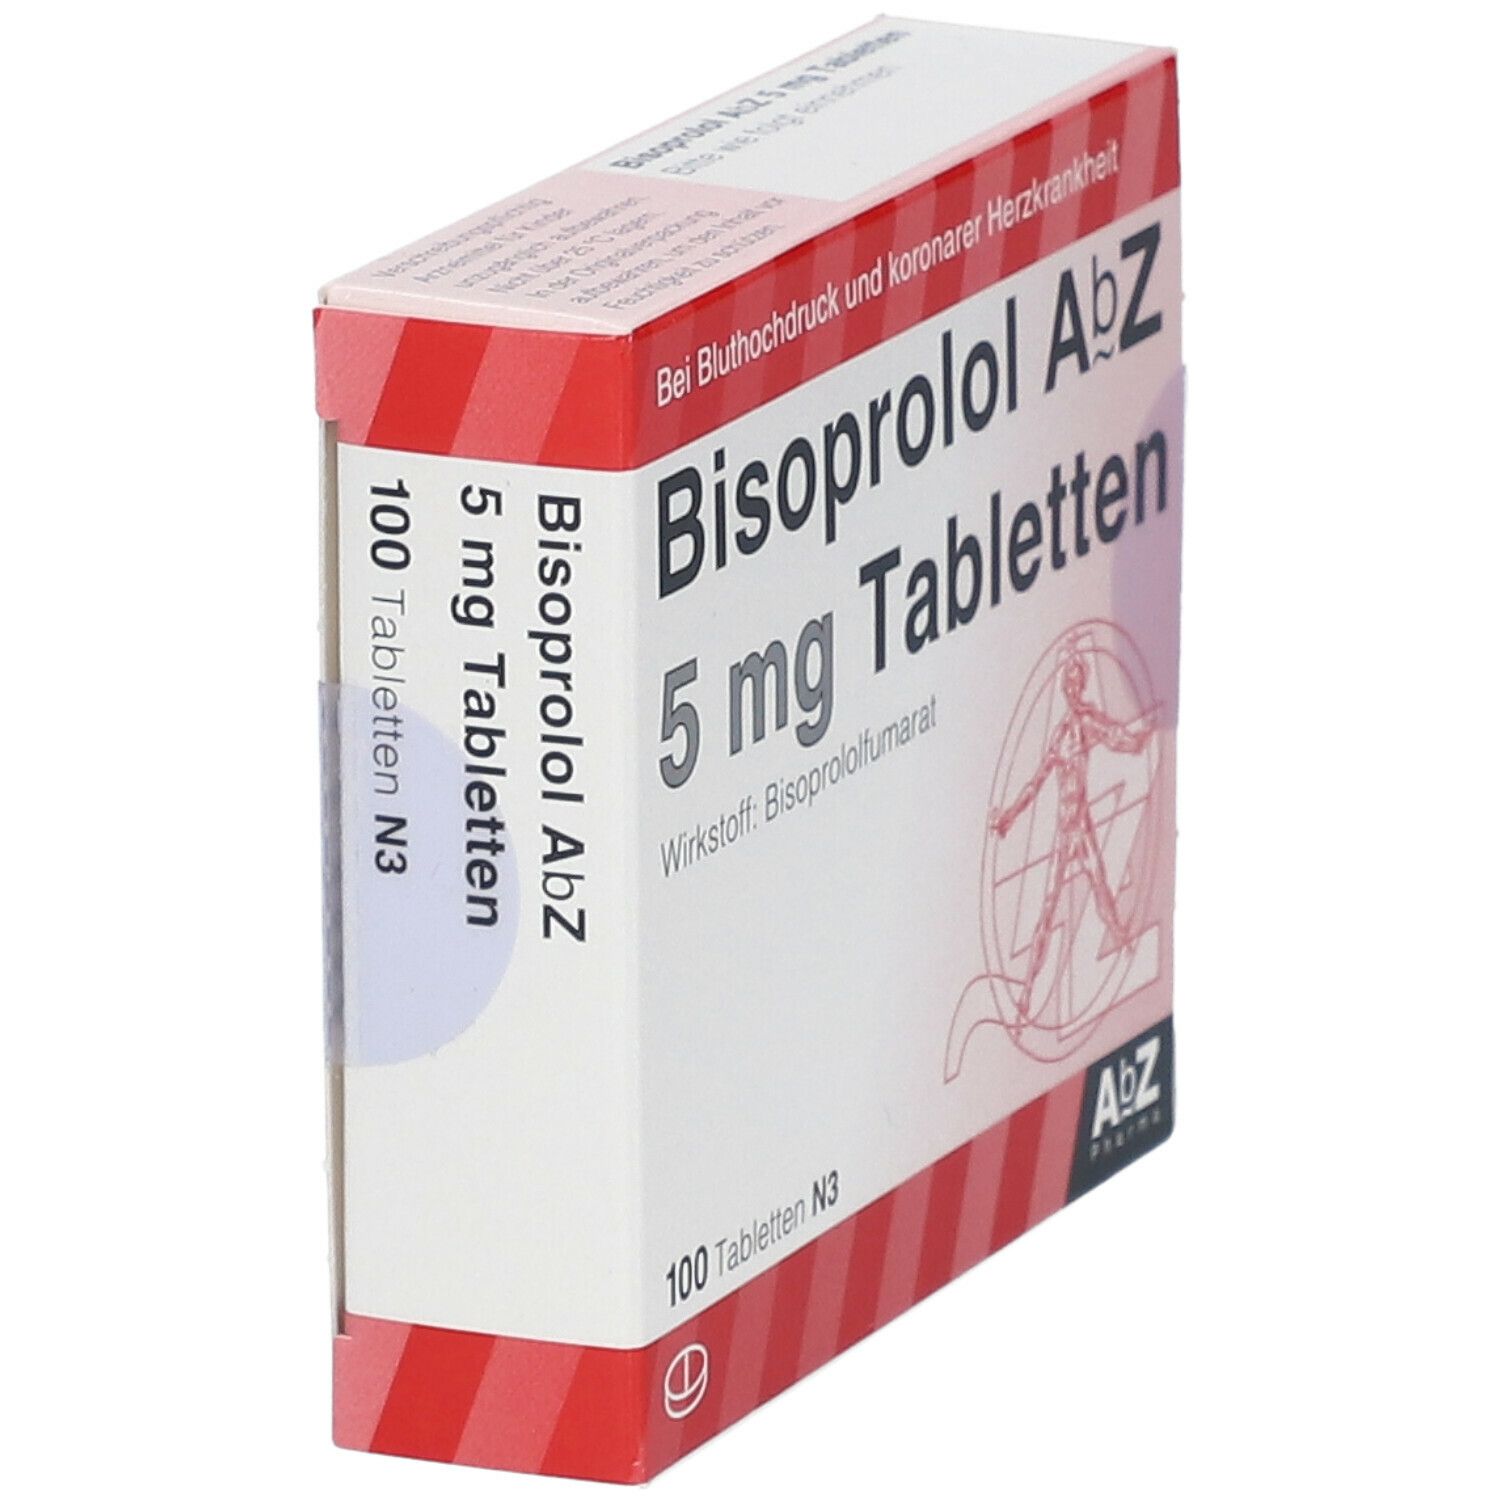 Bisoprolol AbZ 5Mg